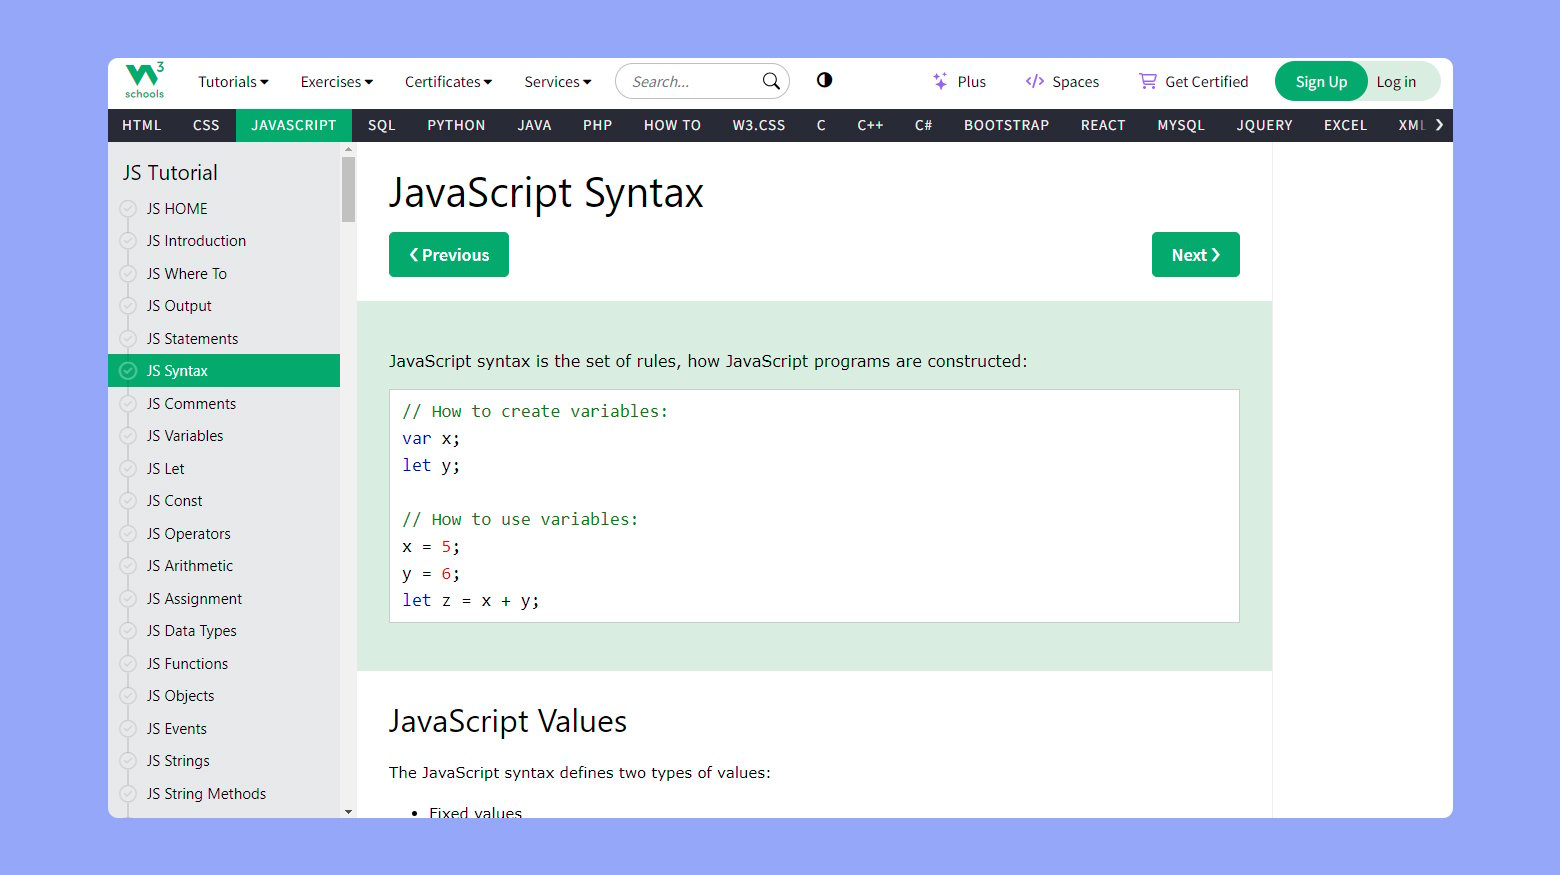 Java Script Syntax tutorial in W3 schools.